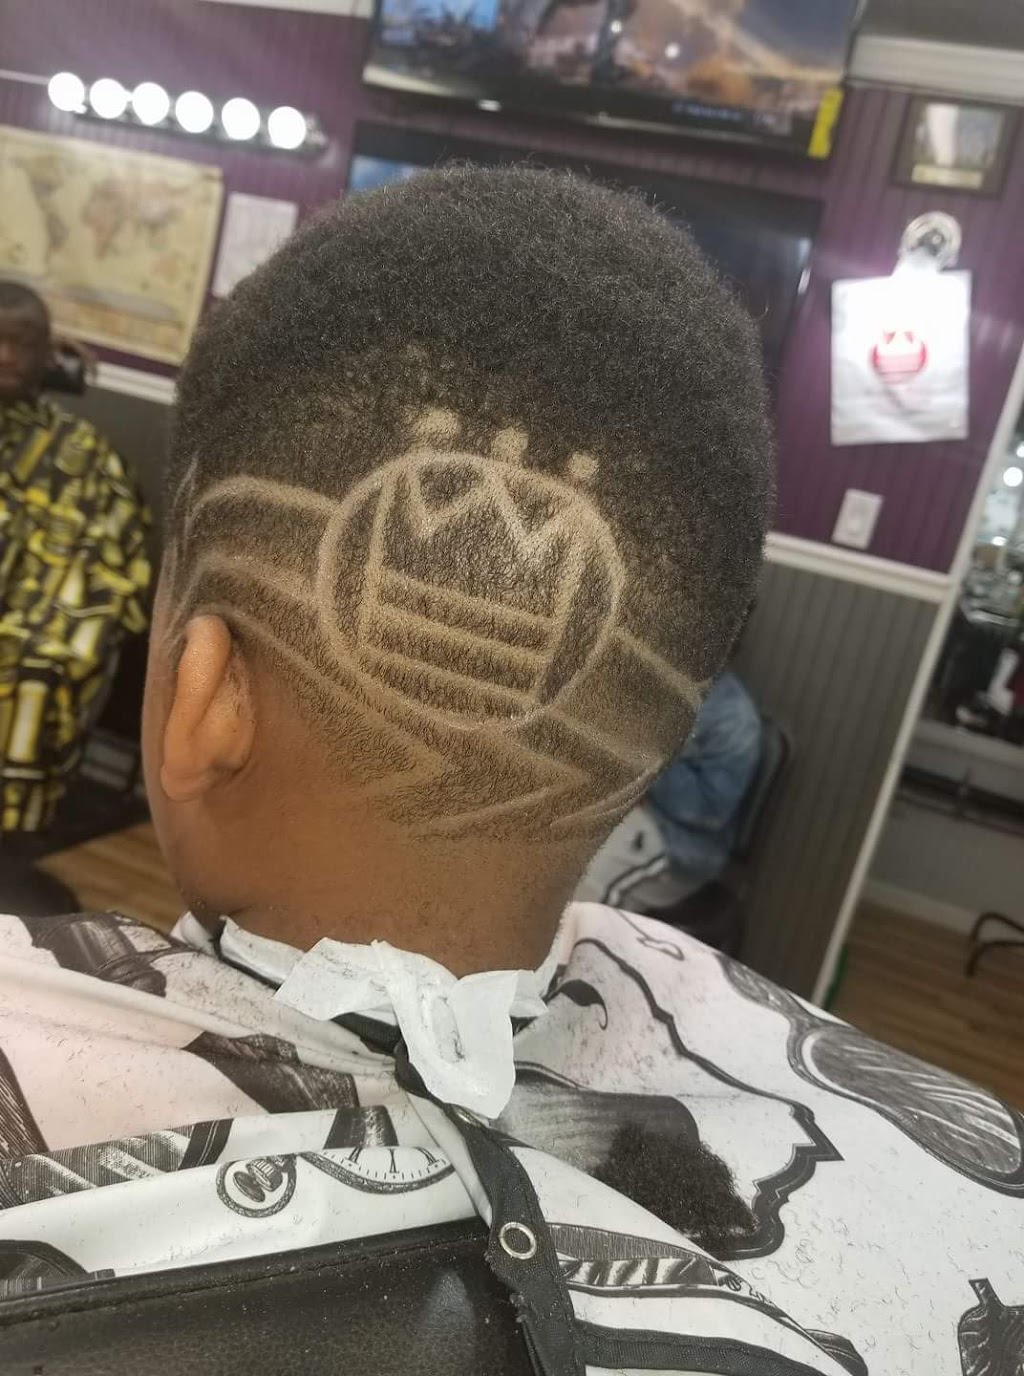 The Kings Kids barbershop | 1164 Broadway Ave #103, East McKeesport, PA 15035, USA | Phone: (412) 646-1460